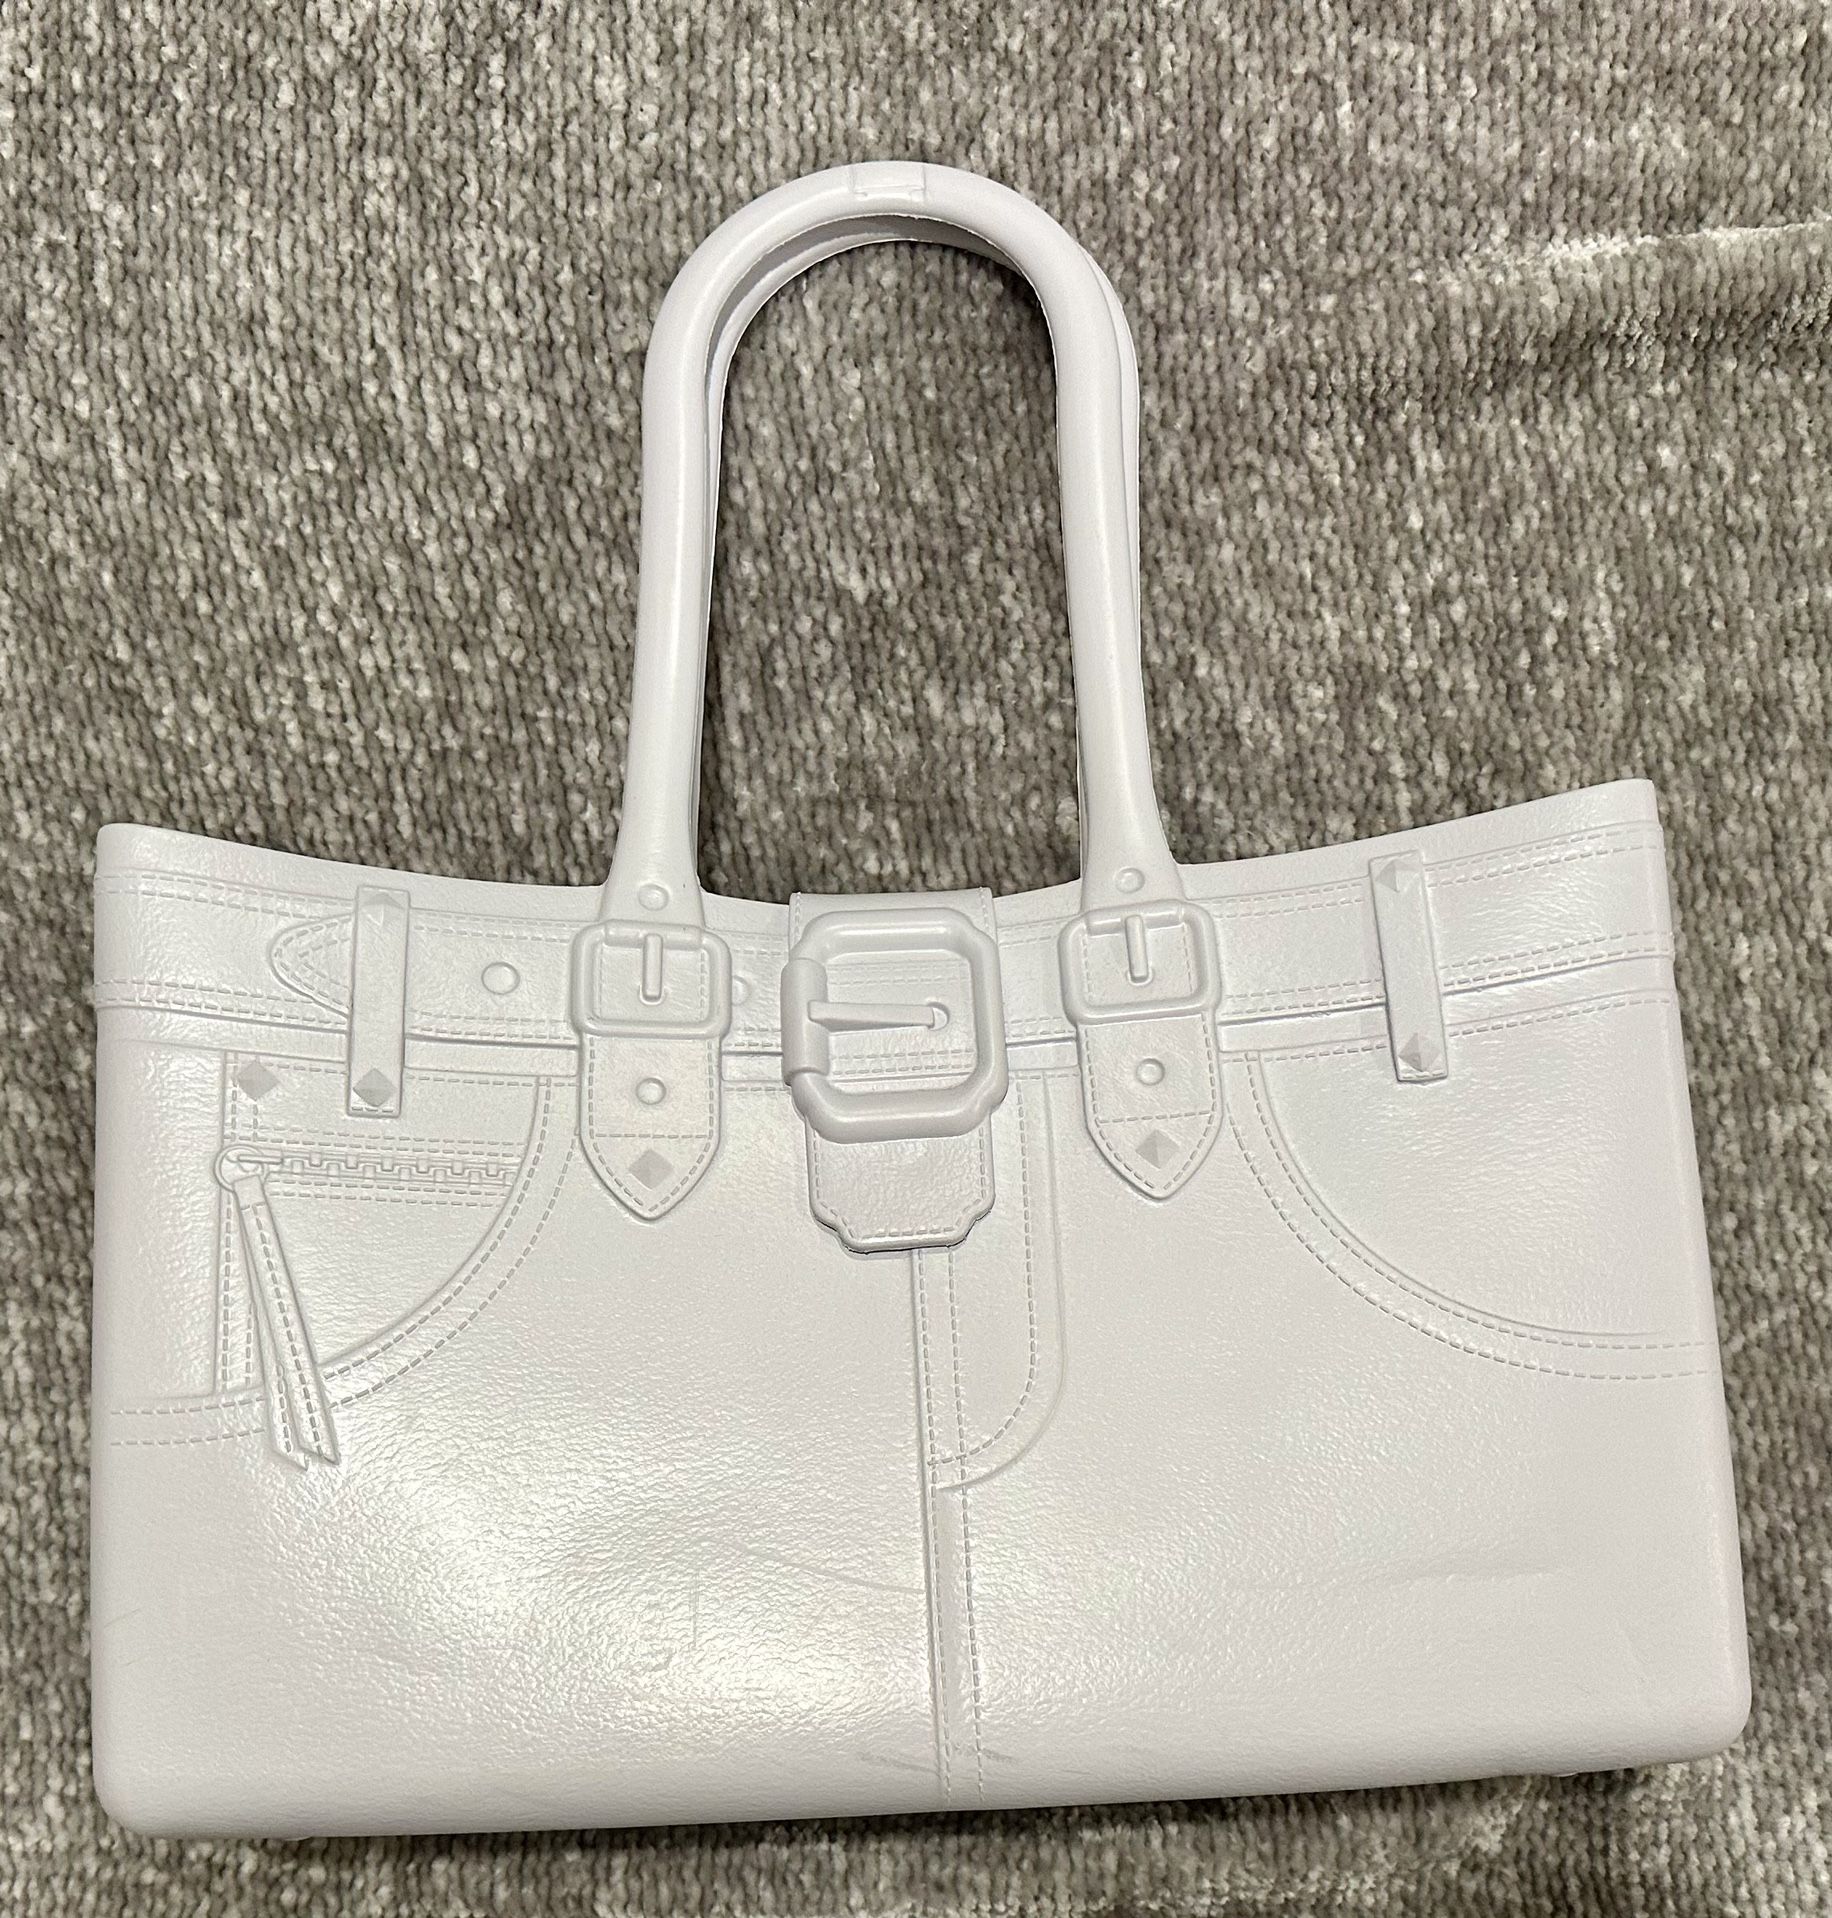 GREAT BAG CO White Tote Shoulder Handbag by Robert Verdi - Model M - Diamond